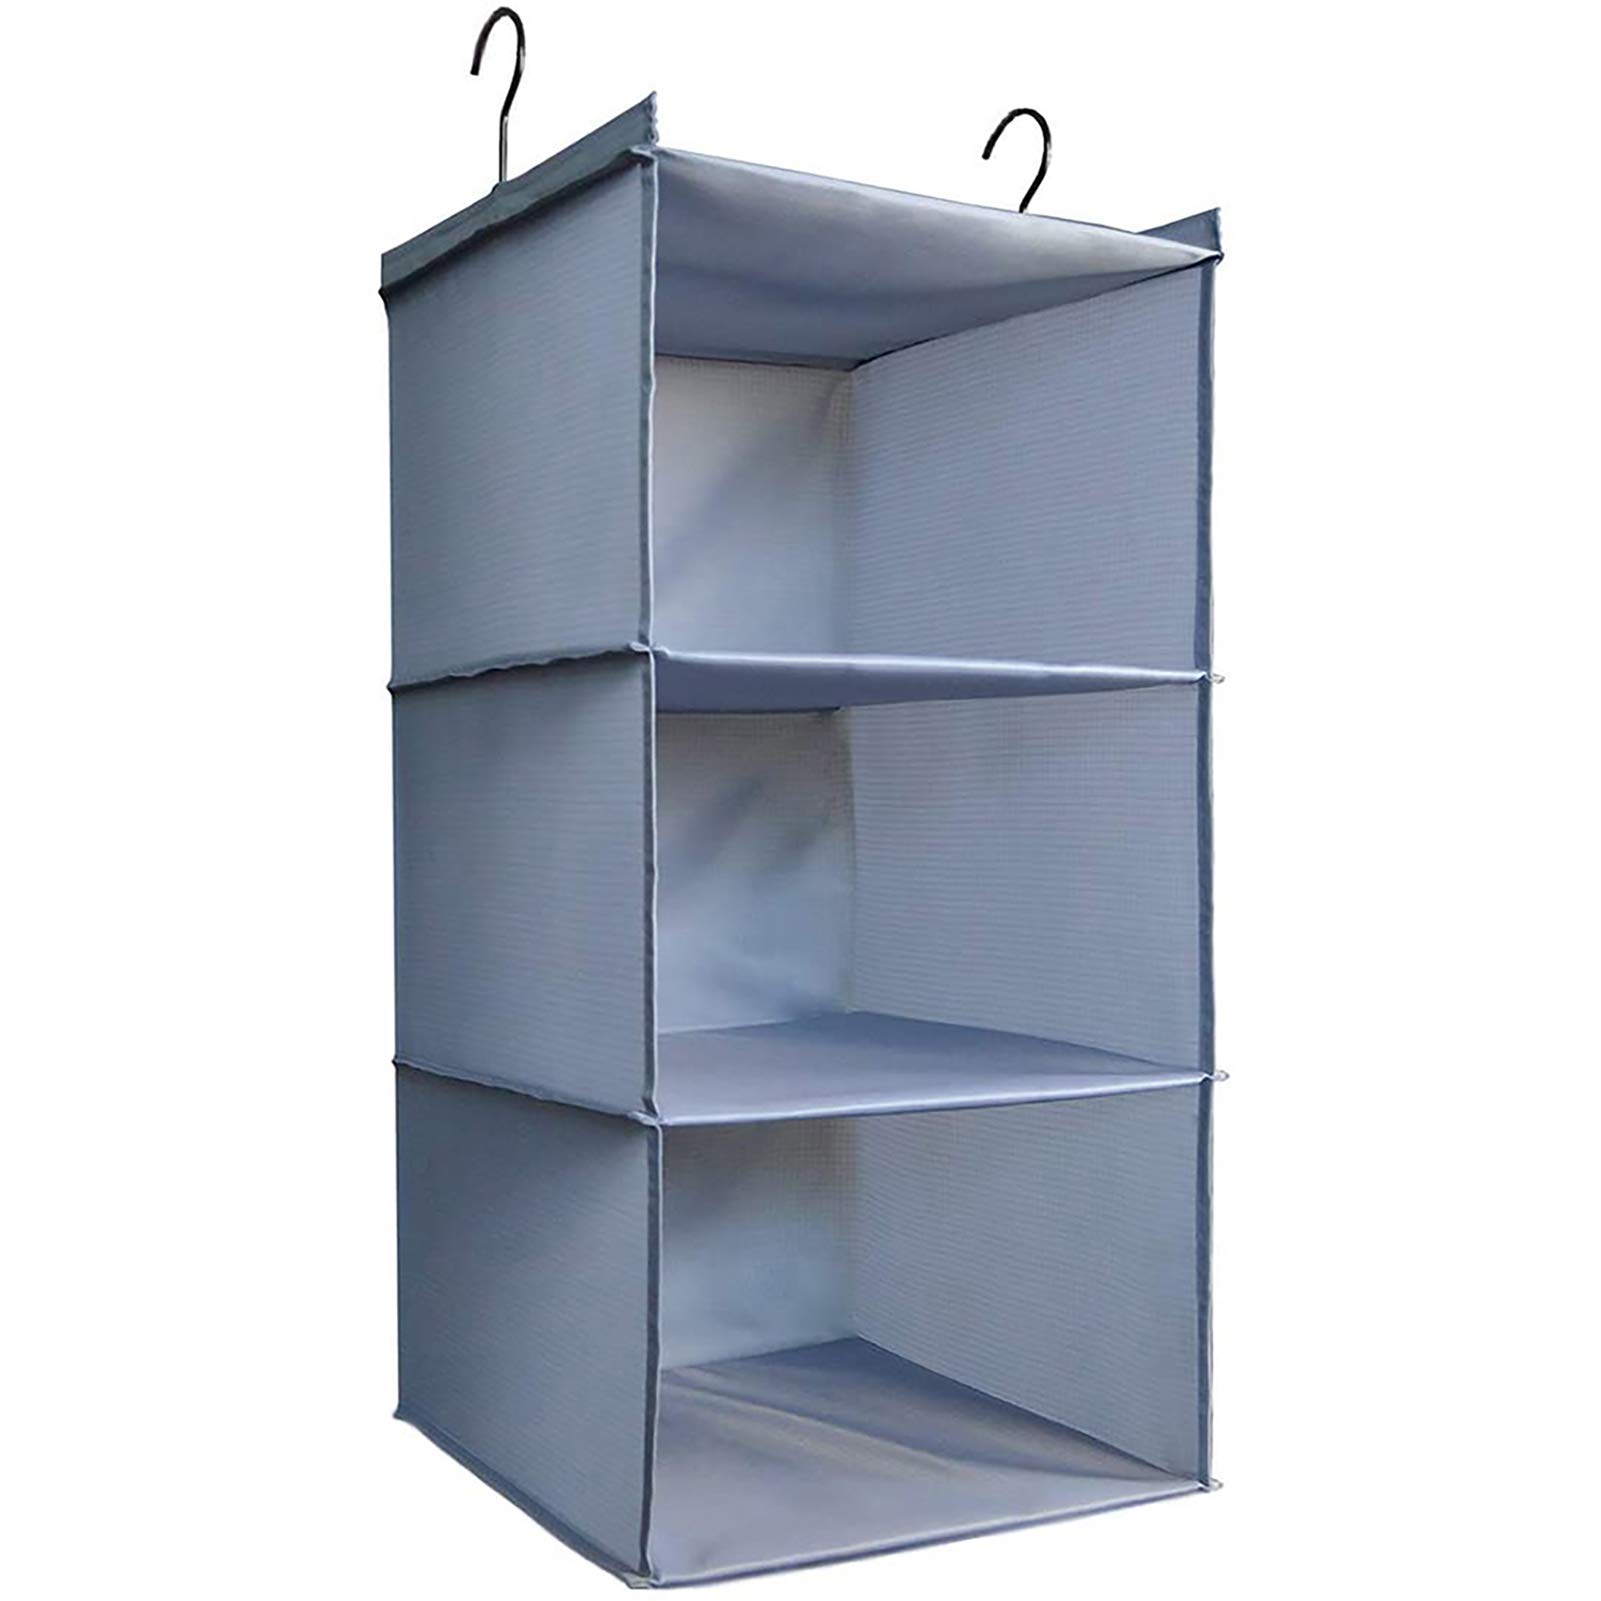 DonYeco Hanging Closet Organizer, Easy Mount Foldable